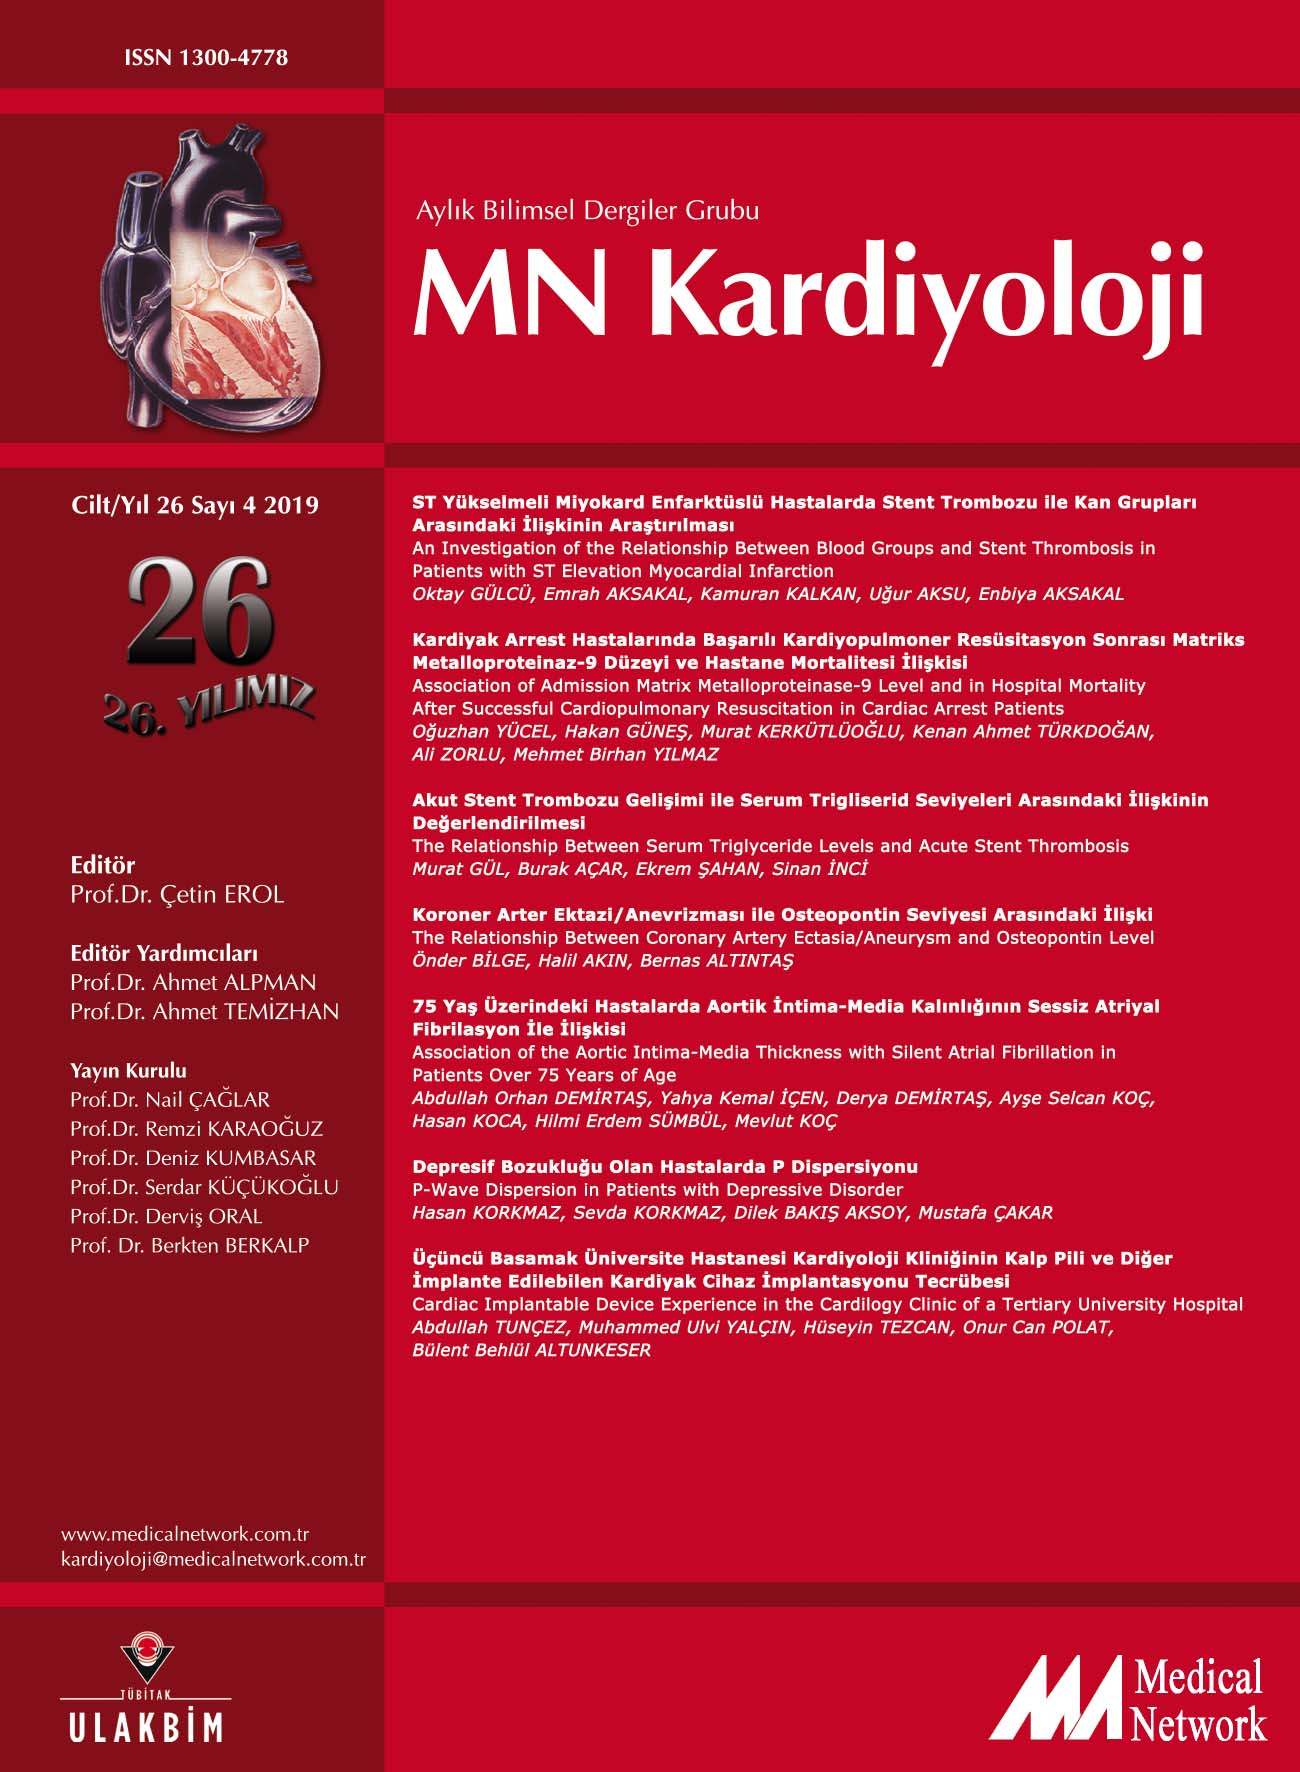 <p>MN Kardiyoloji Cilt: 26 Sayı: 4 2019 MN Cardiology Volume: 26 No: 4 2019</p>